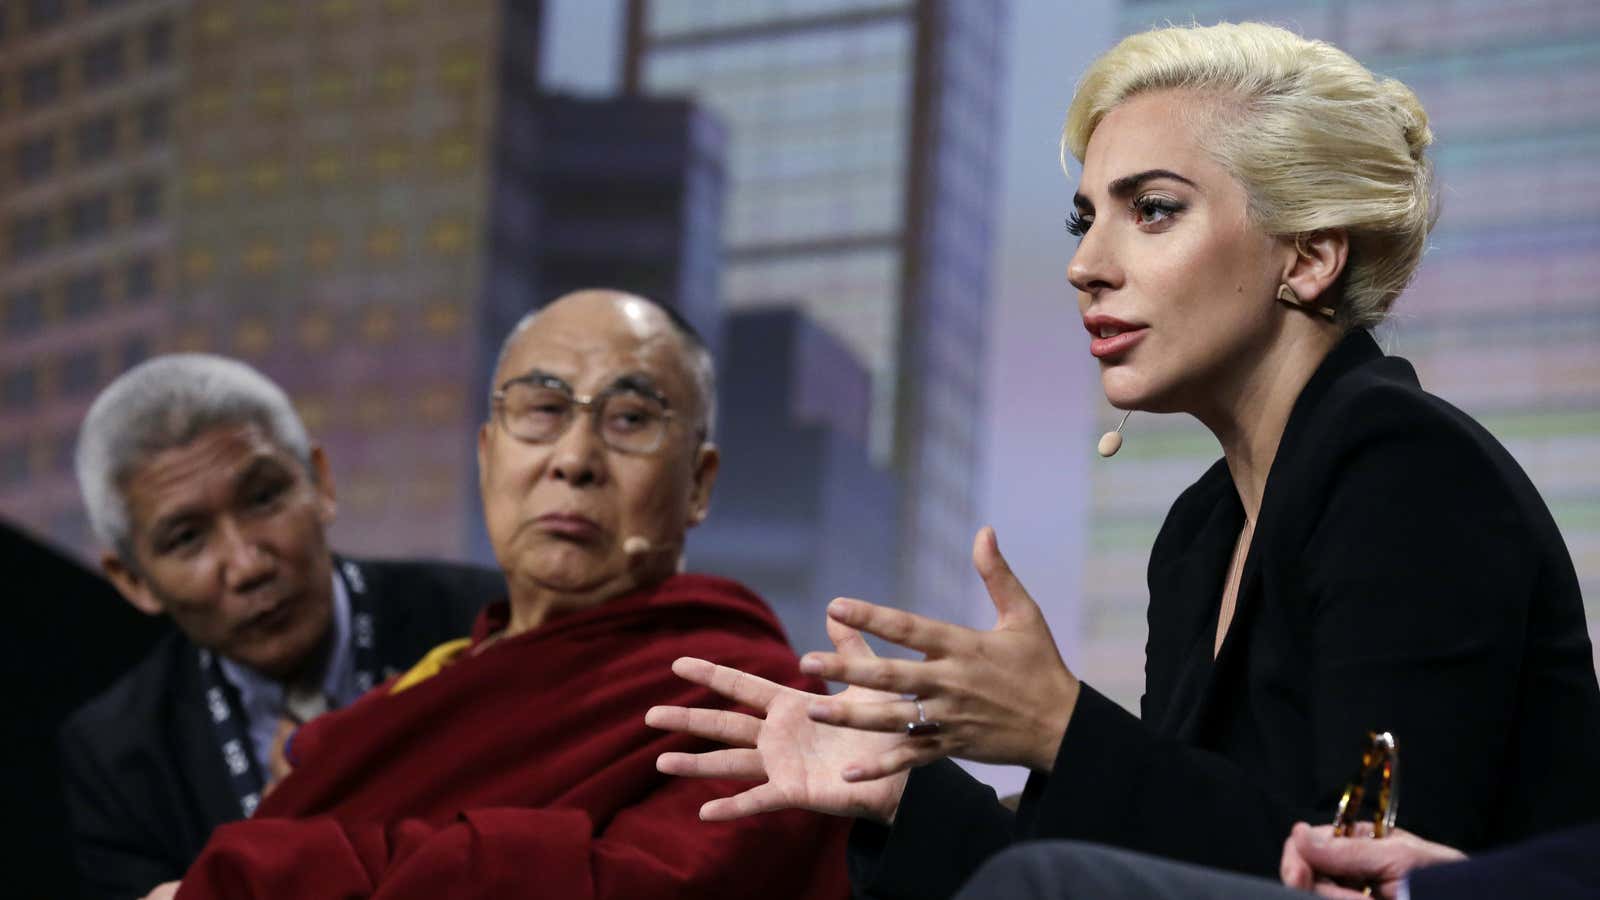 Lady Gaga with the Dalai Lama.